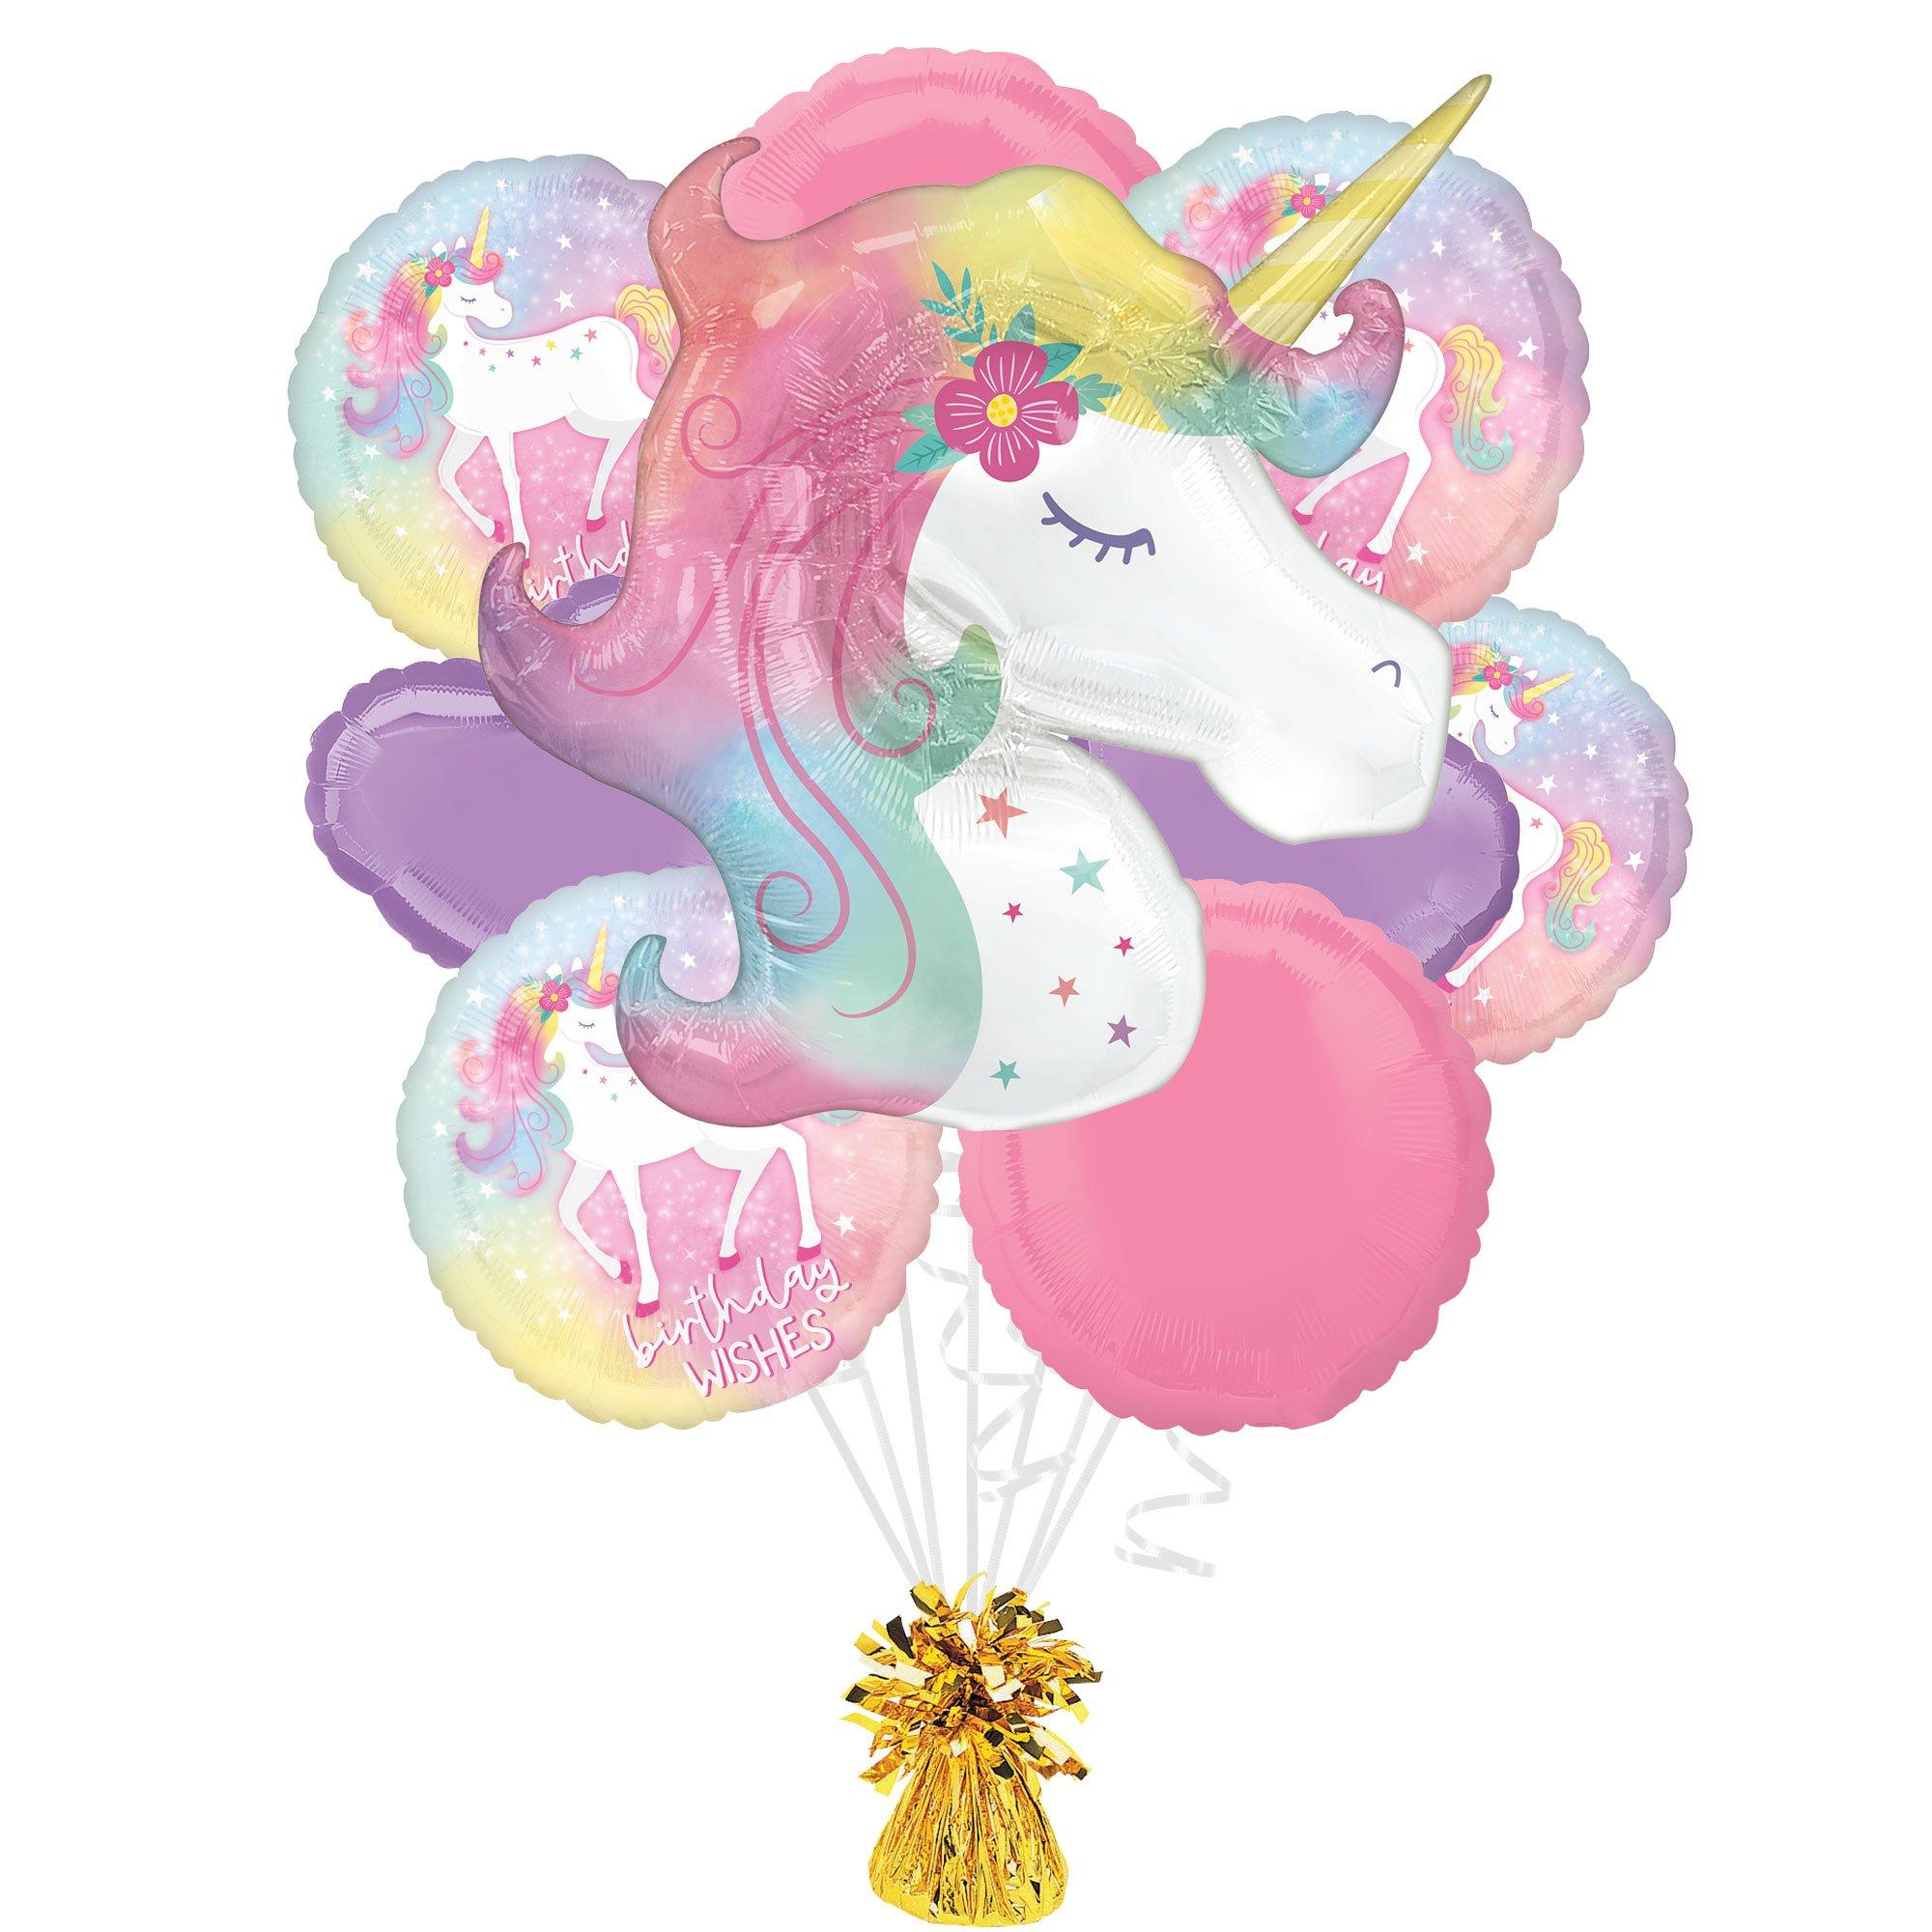 Rainbow Unicorn Birthday Supplies Set Unicorn Balloons S Plates Napkin  Birthday Party Decorations Kid Girl 1 2 3 4 5 Year Old